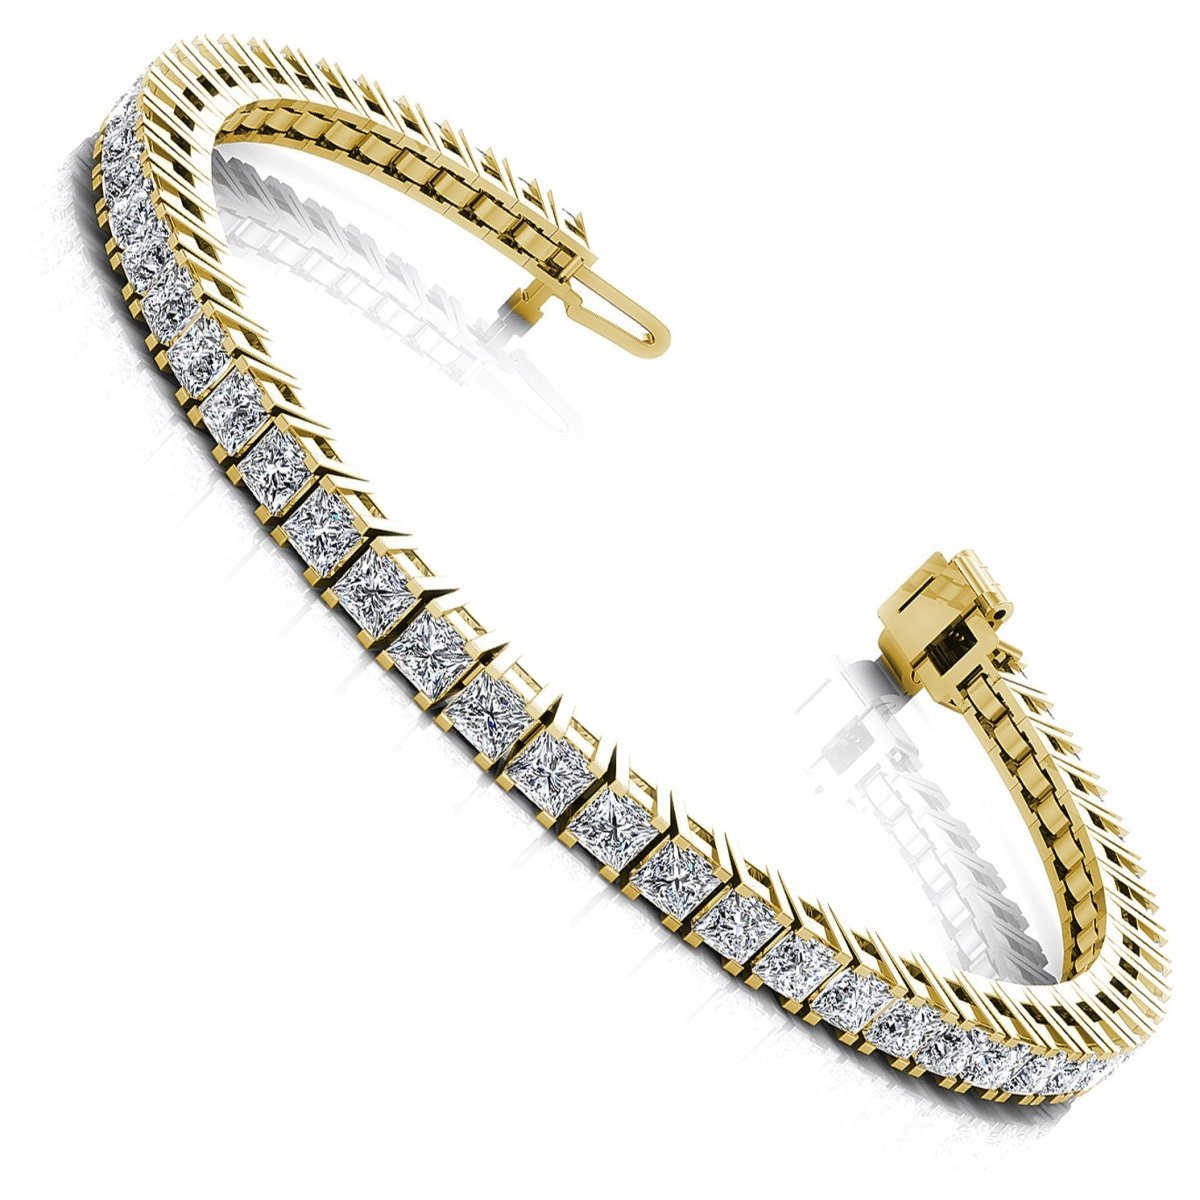 Exquisite 9.00 CT Princess cut Diamond Tennis Bracelet in 14KT Yellow Gold - Primestyle.com